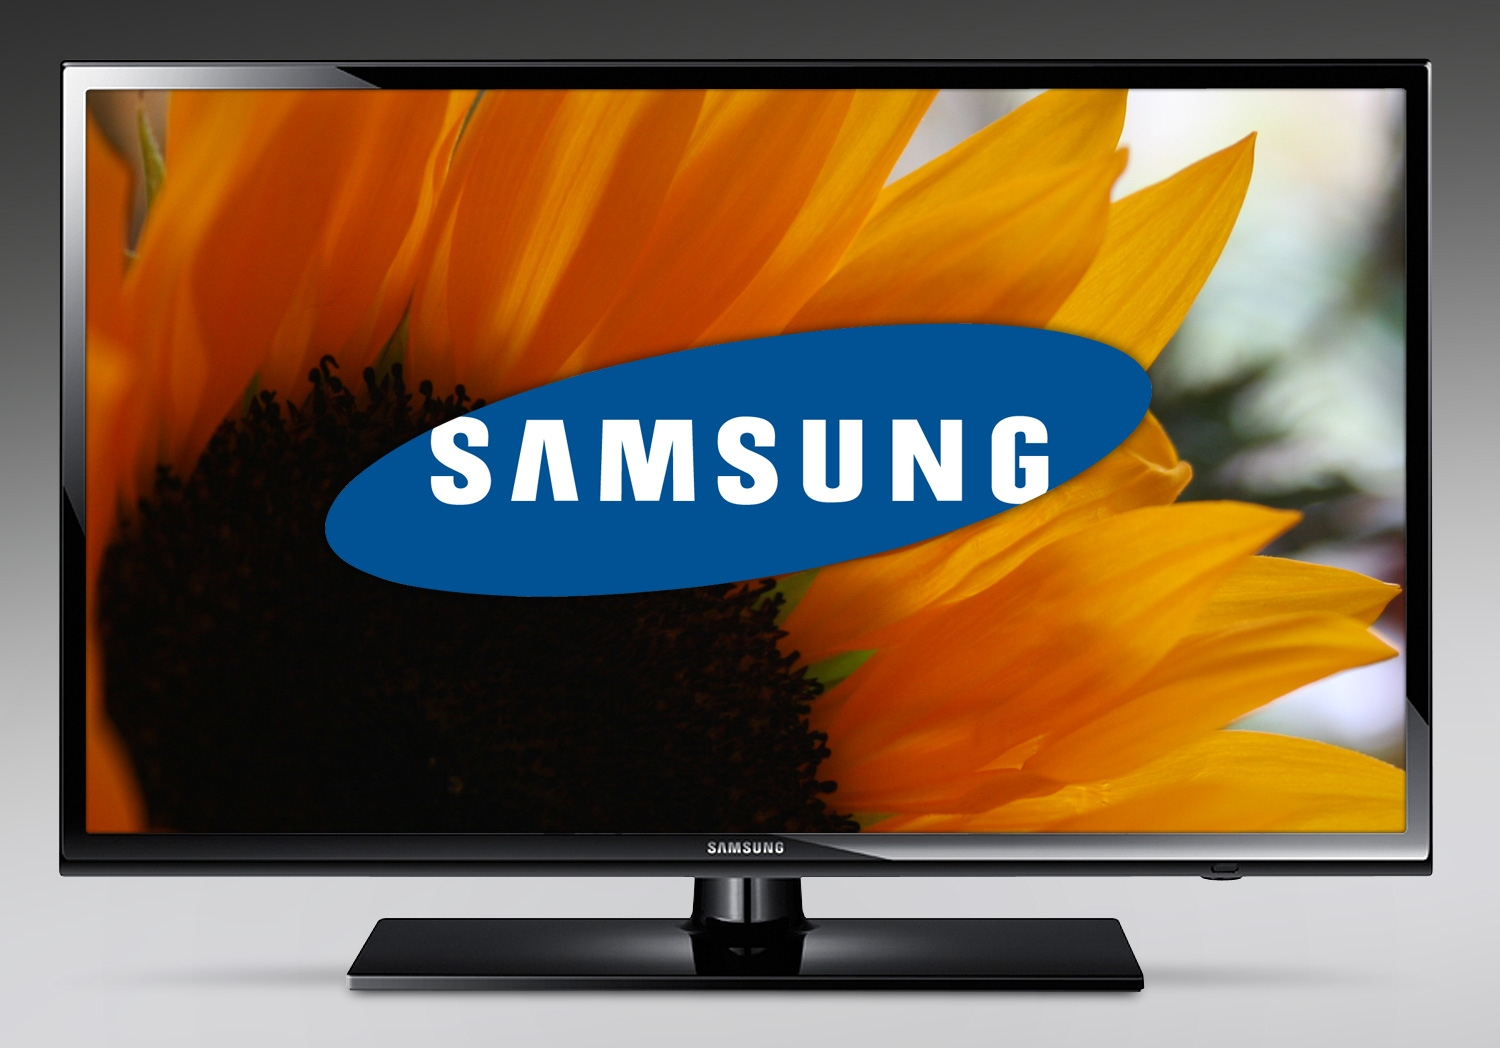 Samsung c телевизором. Телик самсунг. Самсунг ТВ реклама. Рекламный телевизор. Samsung led телевизор.